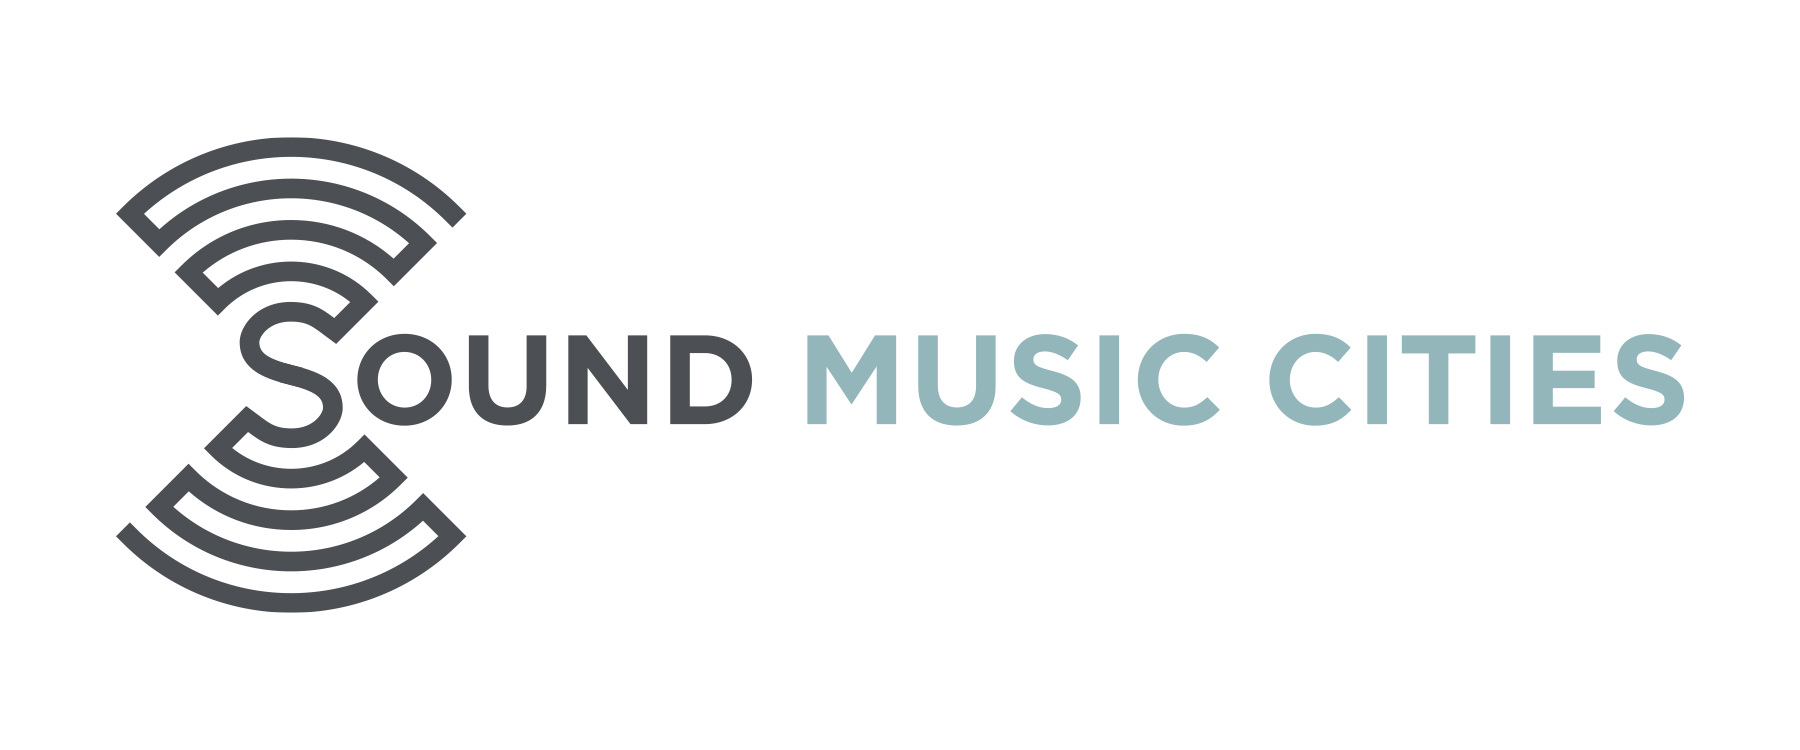 SoundMusicCities logo